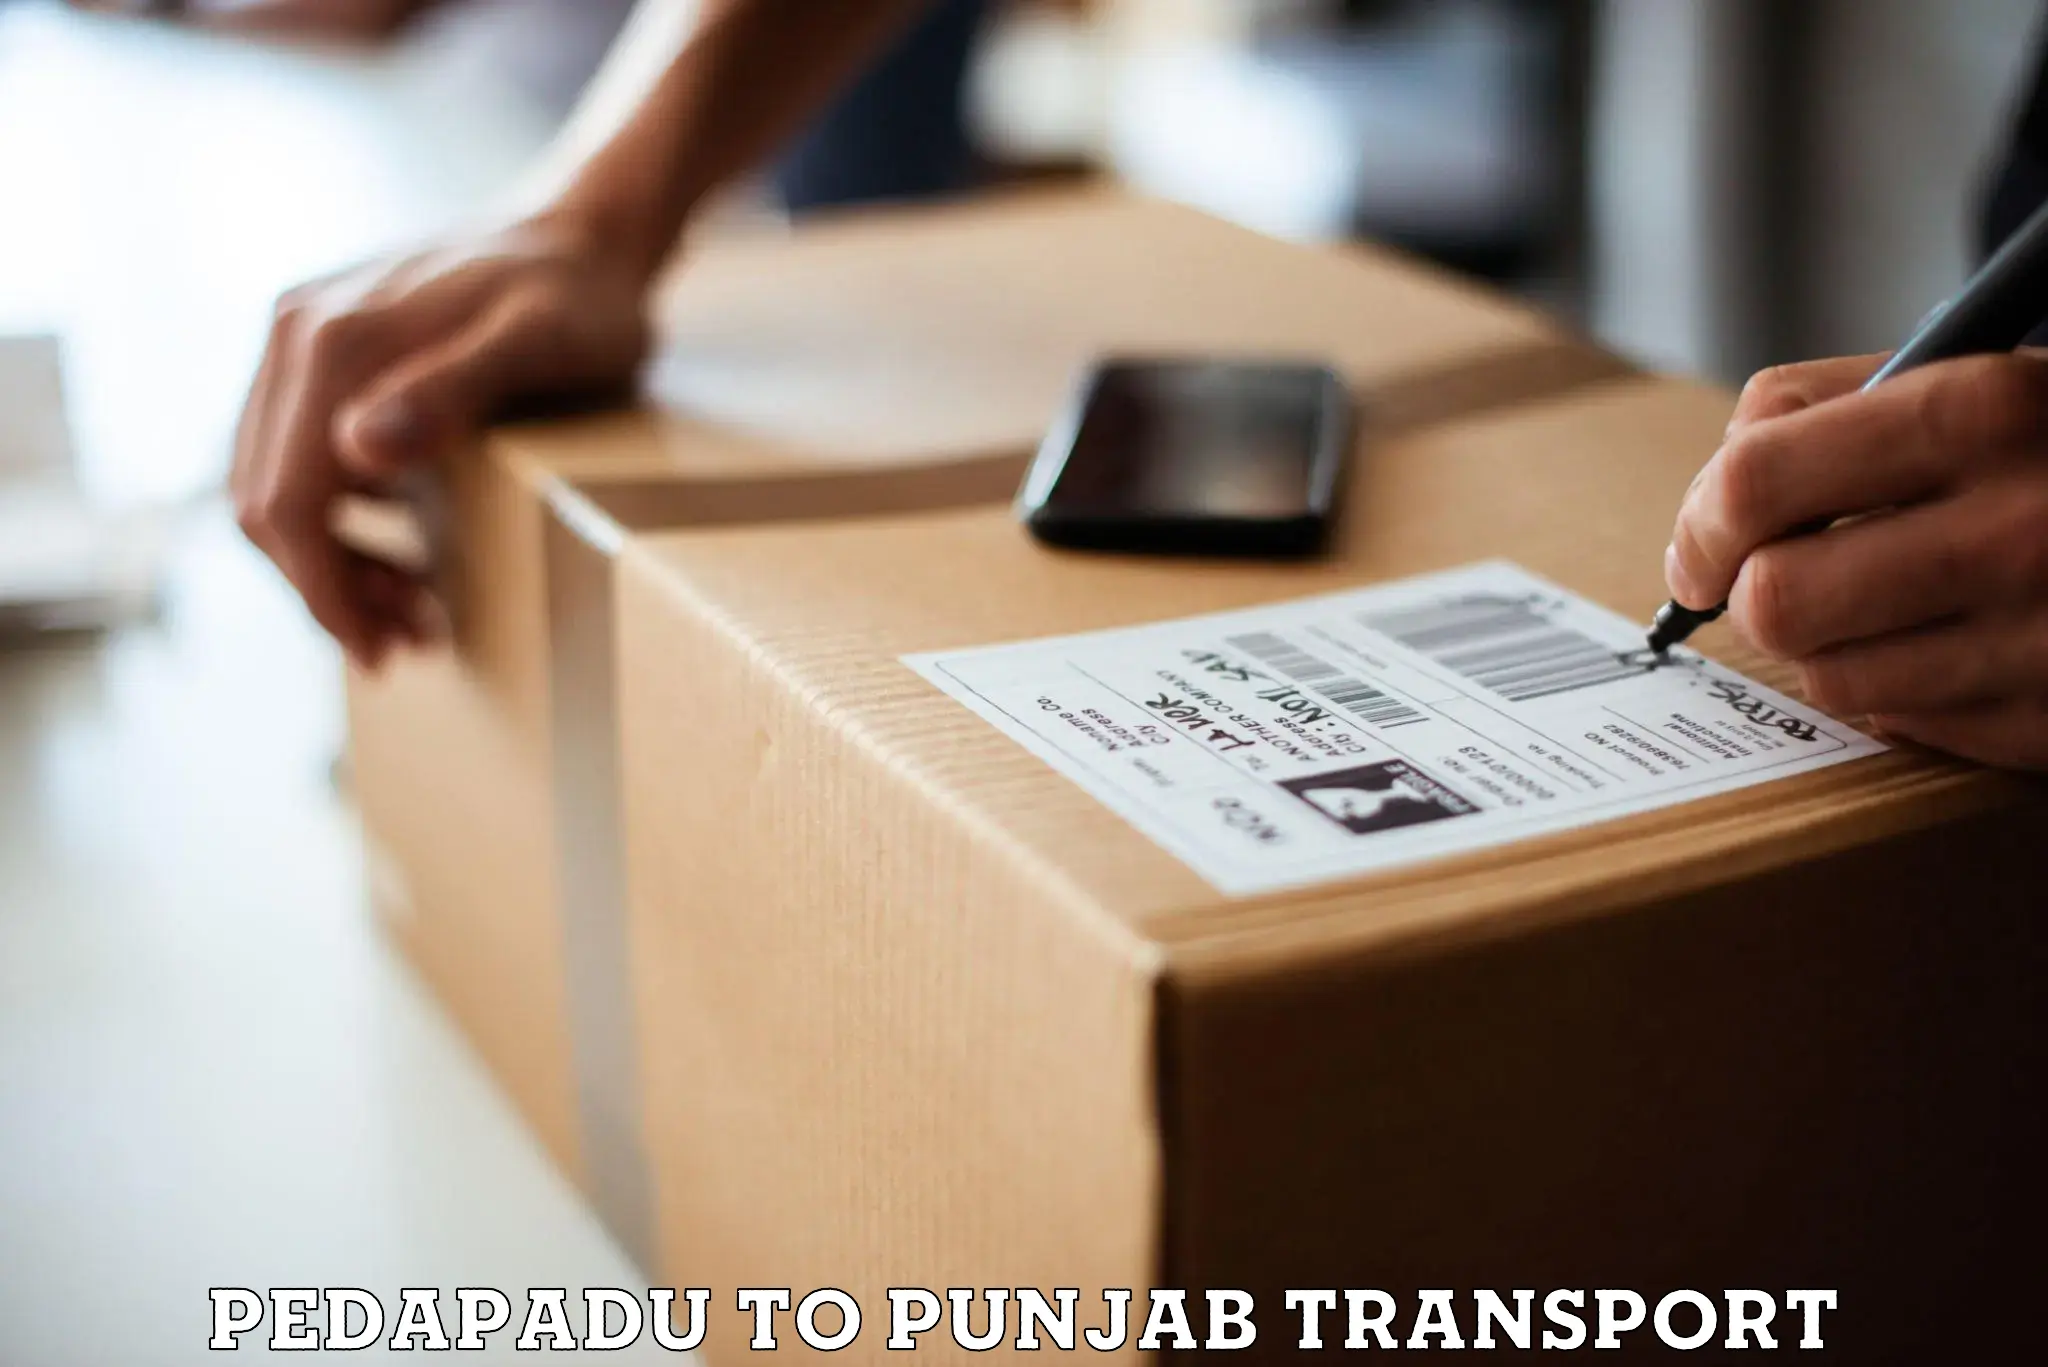 Goods delivery service Pedapadu to Jalandhar